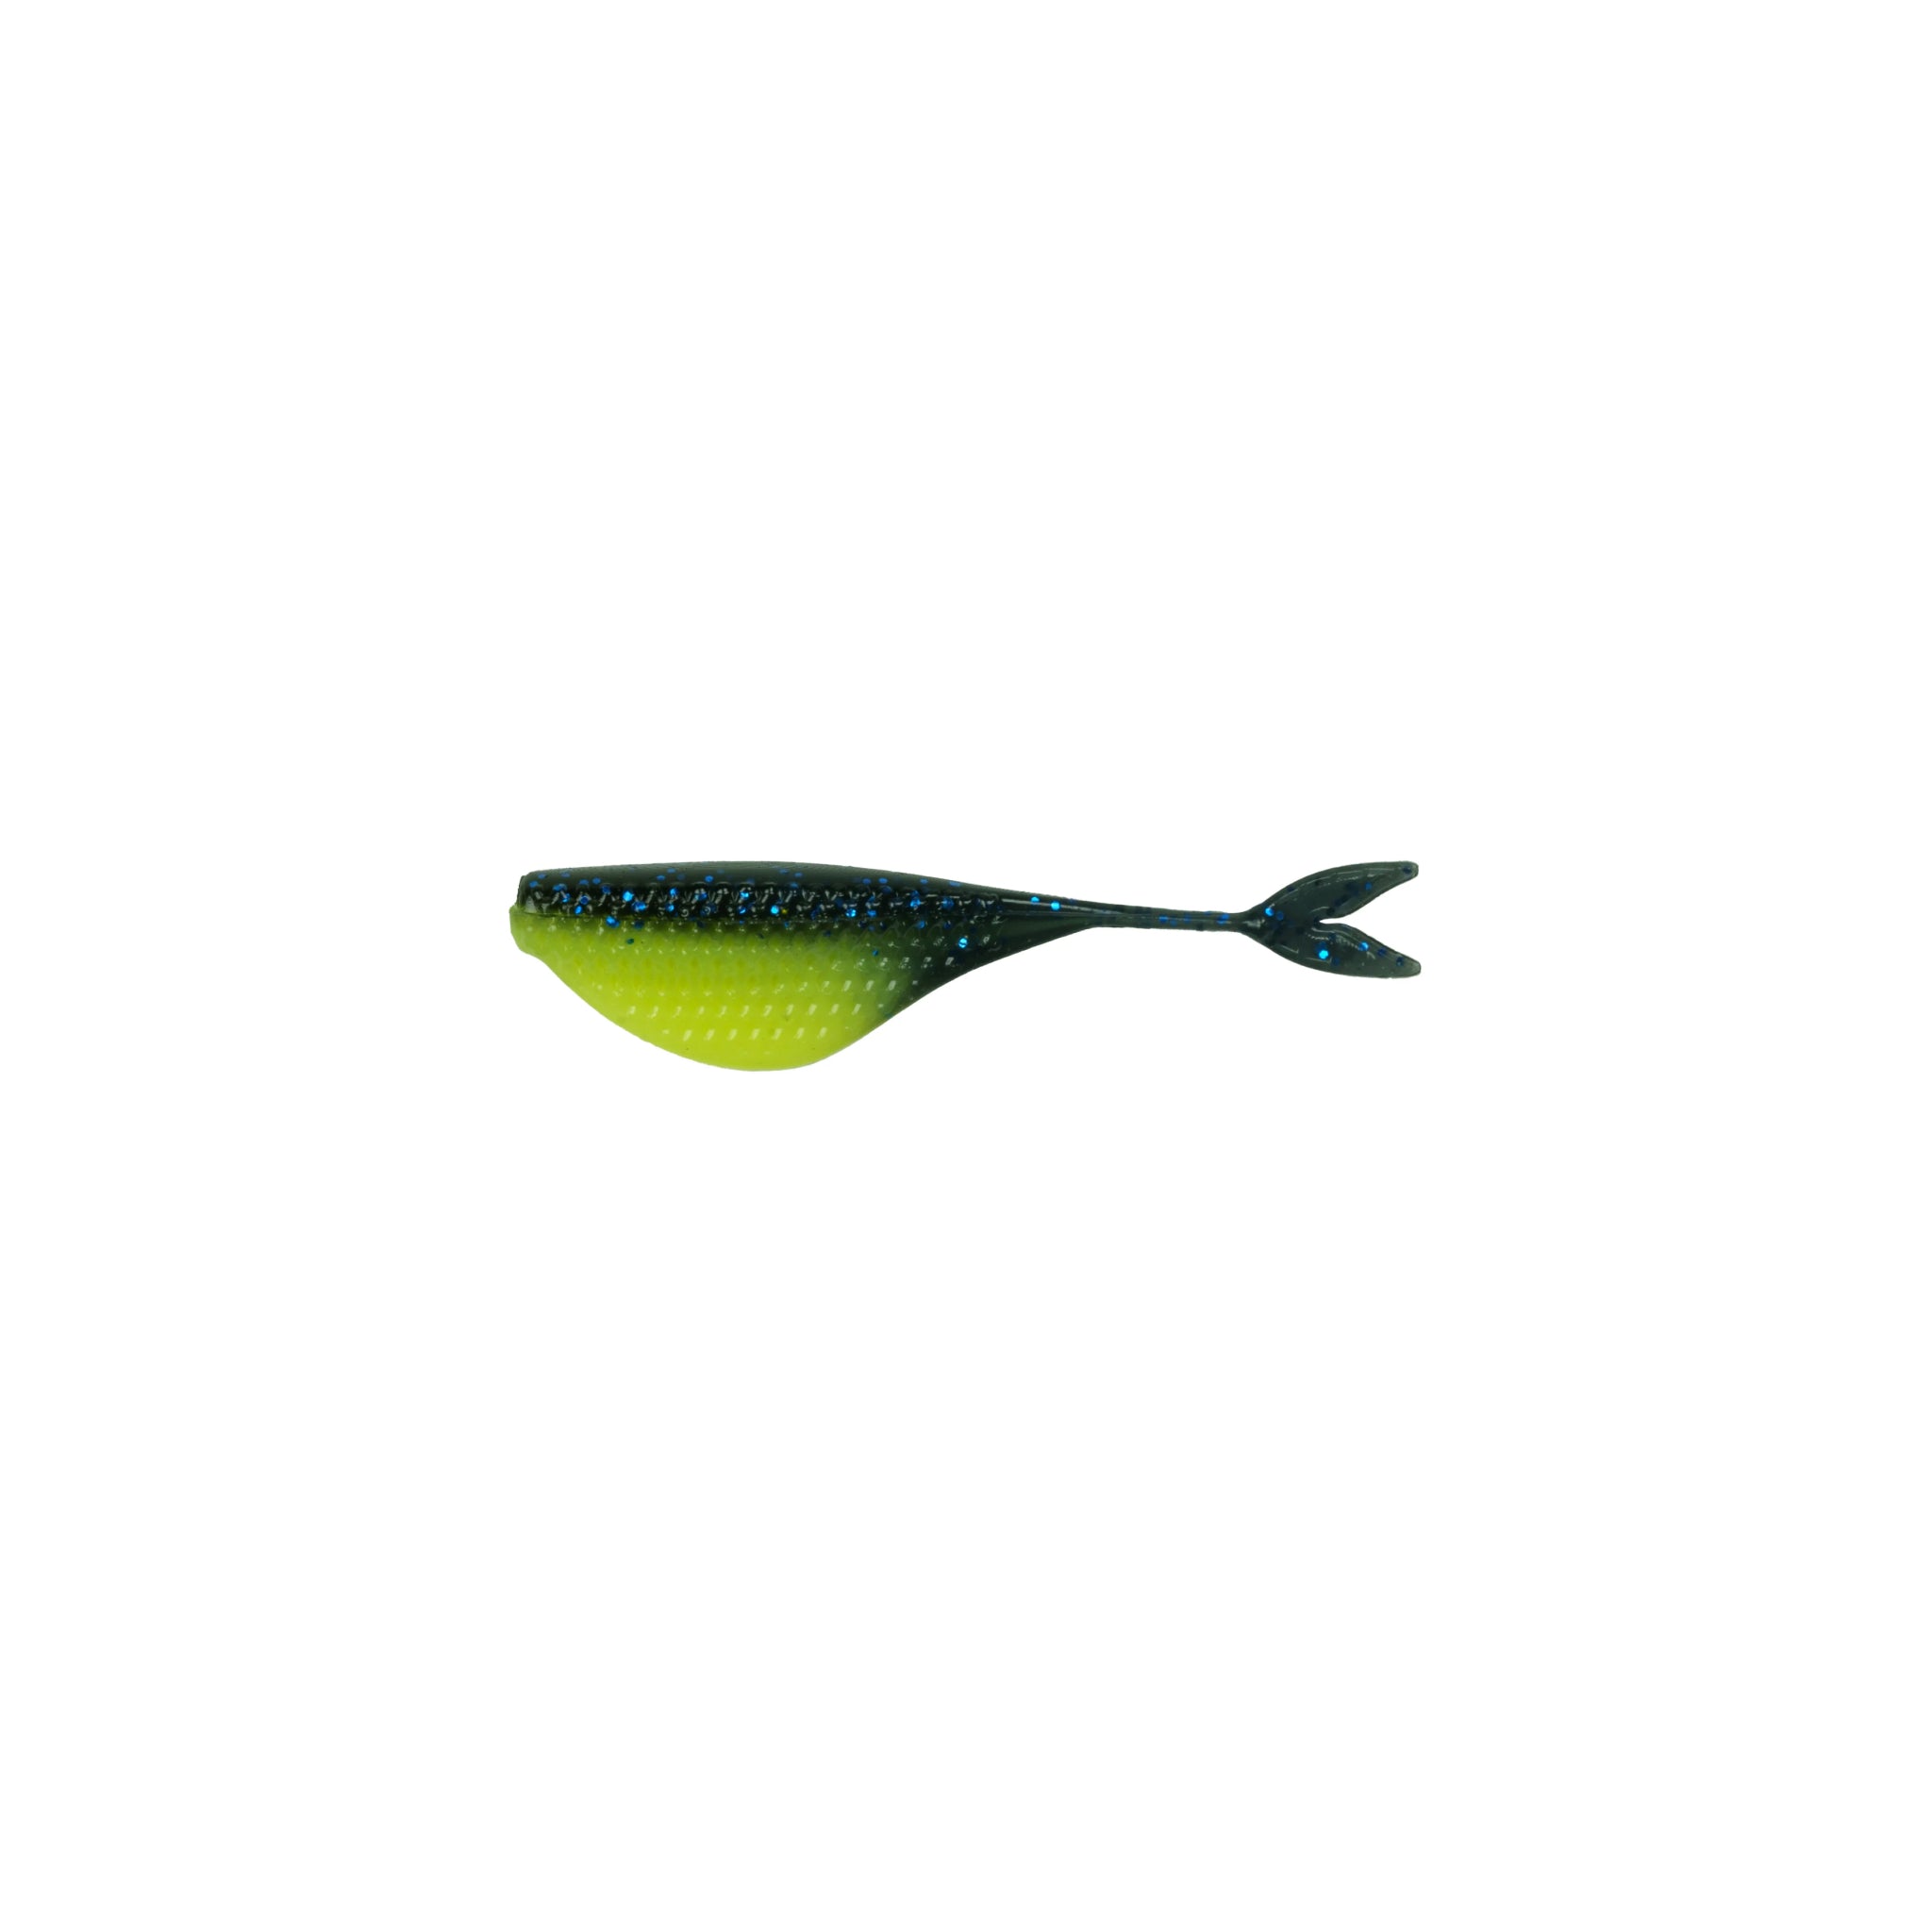 6th Sense Fishing - Crappie - Clobber Minnow - Black Neon